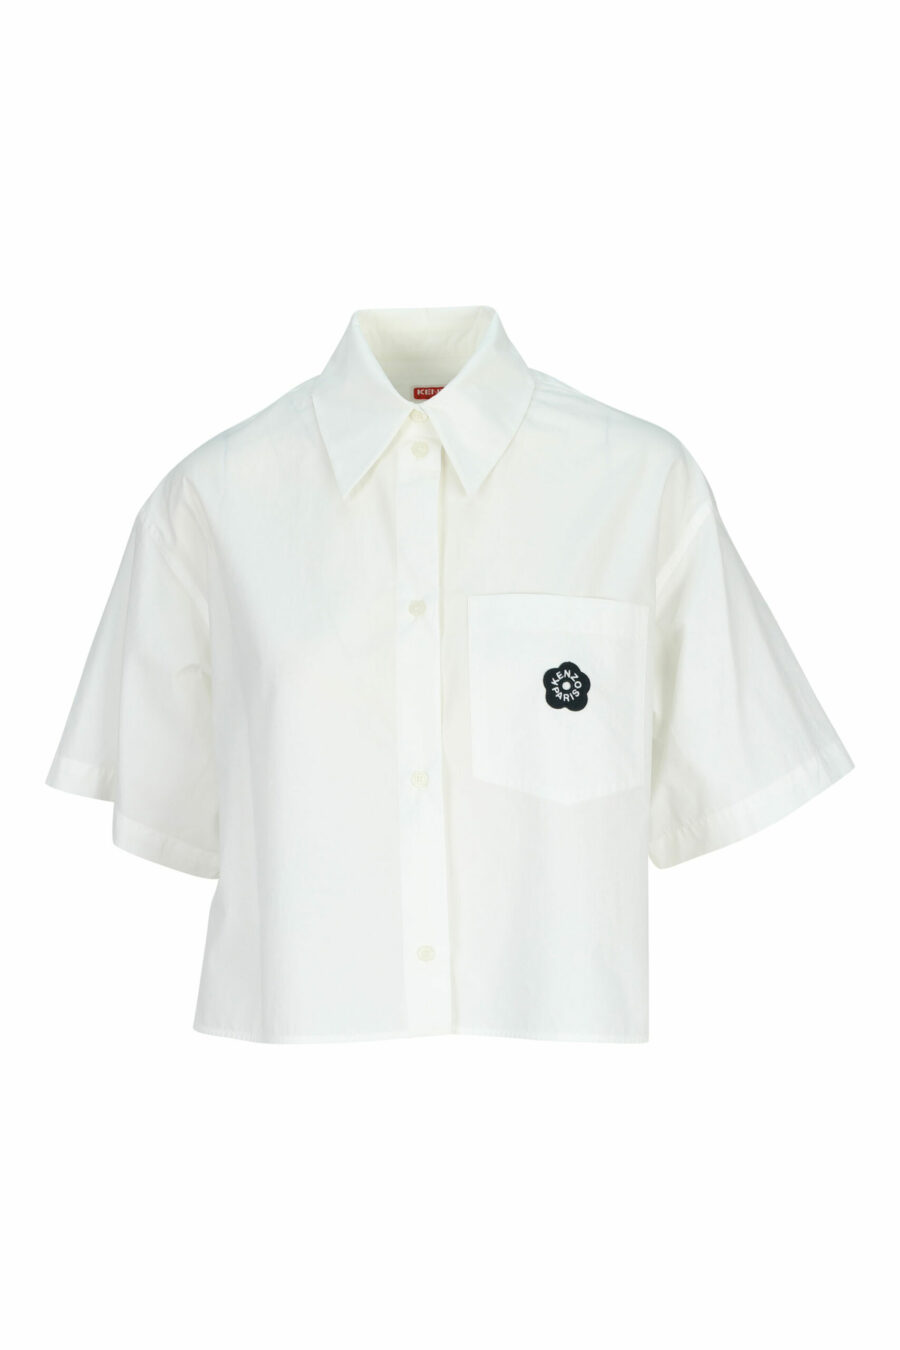 Weißes Kurzarmhemd mit schwarzem "boke flower" Mini-Logo - 3612230589063 skaliert